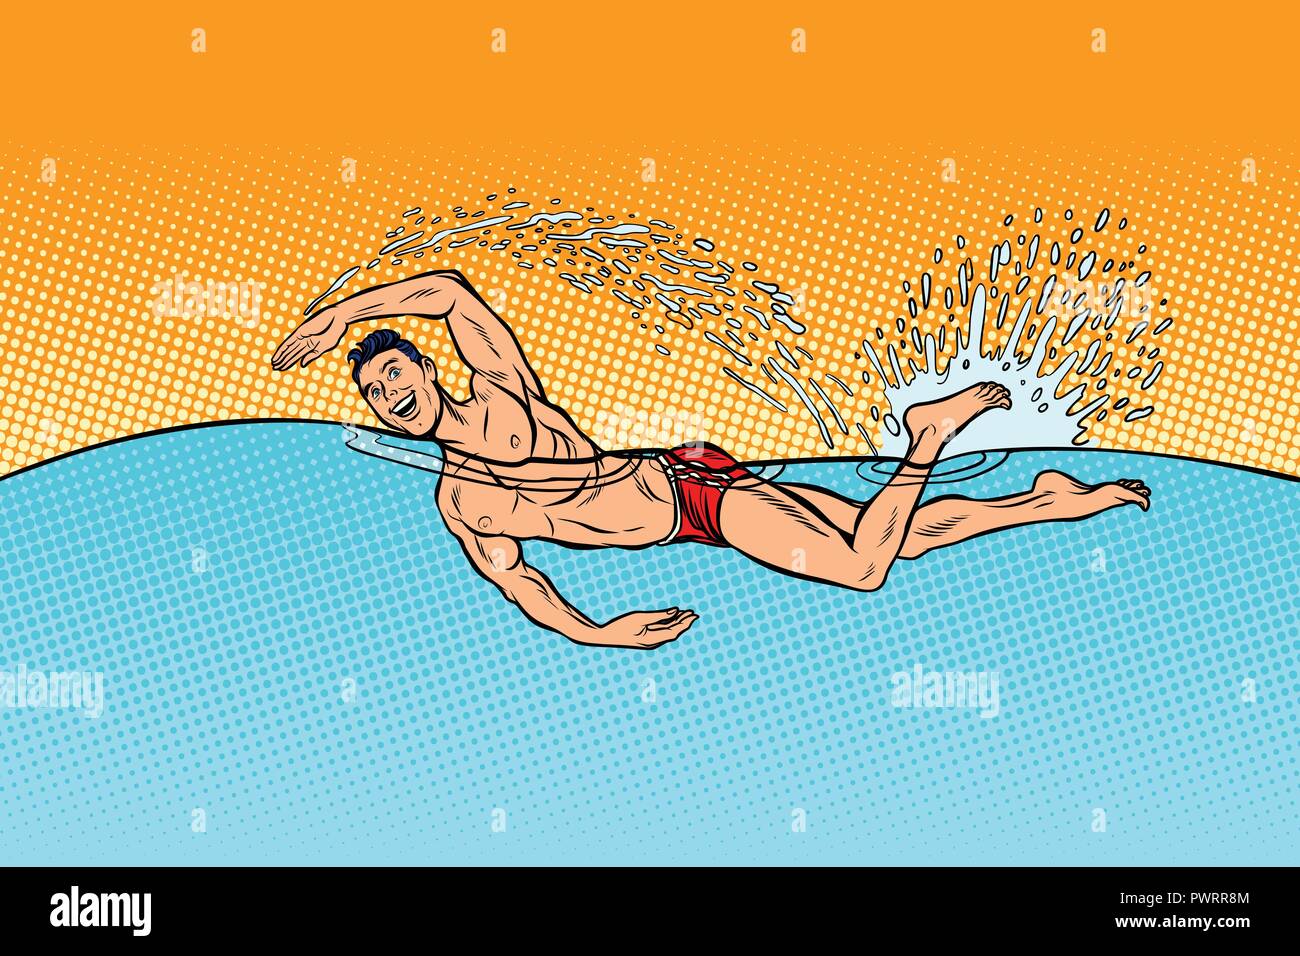 L'uomo nuotatore nuota Illustrazione Vettoriale